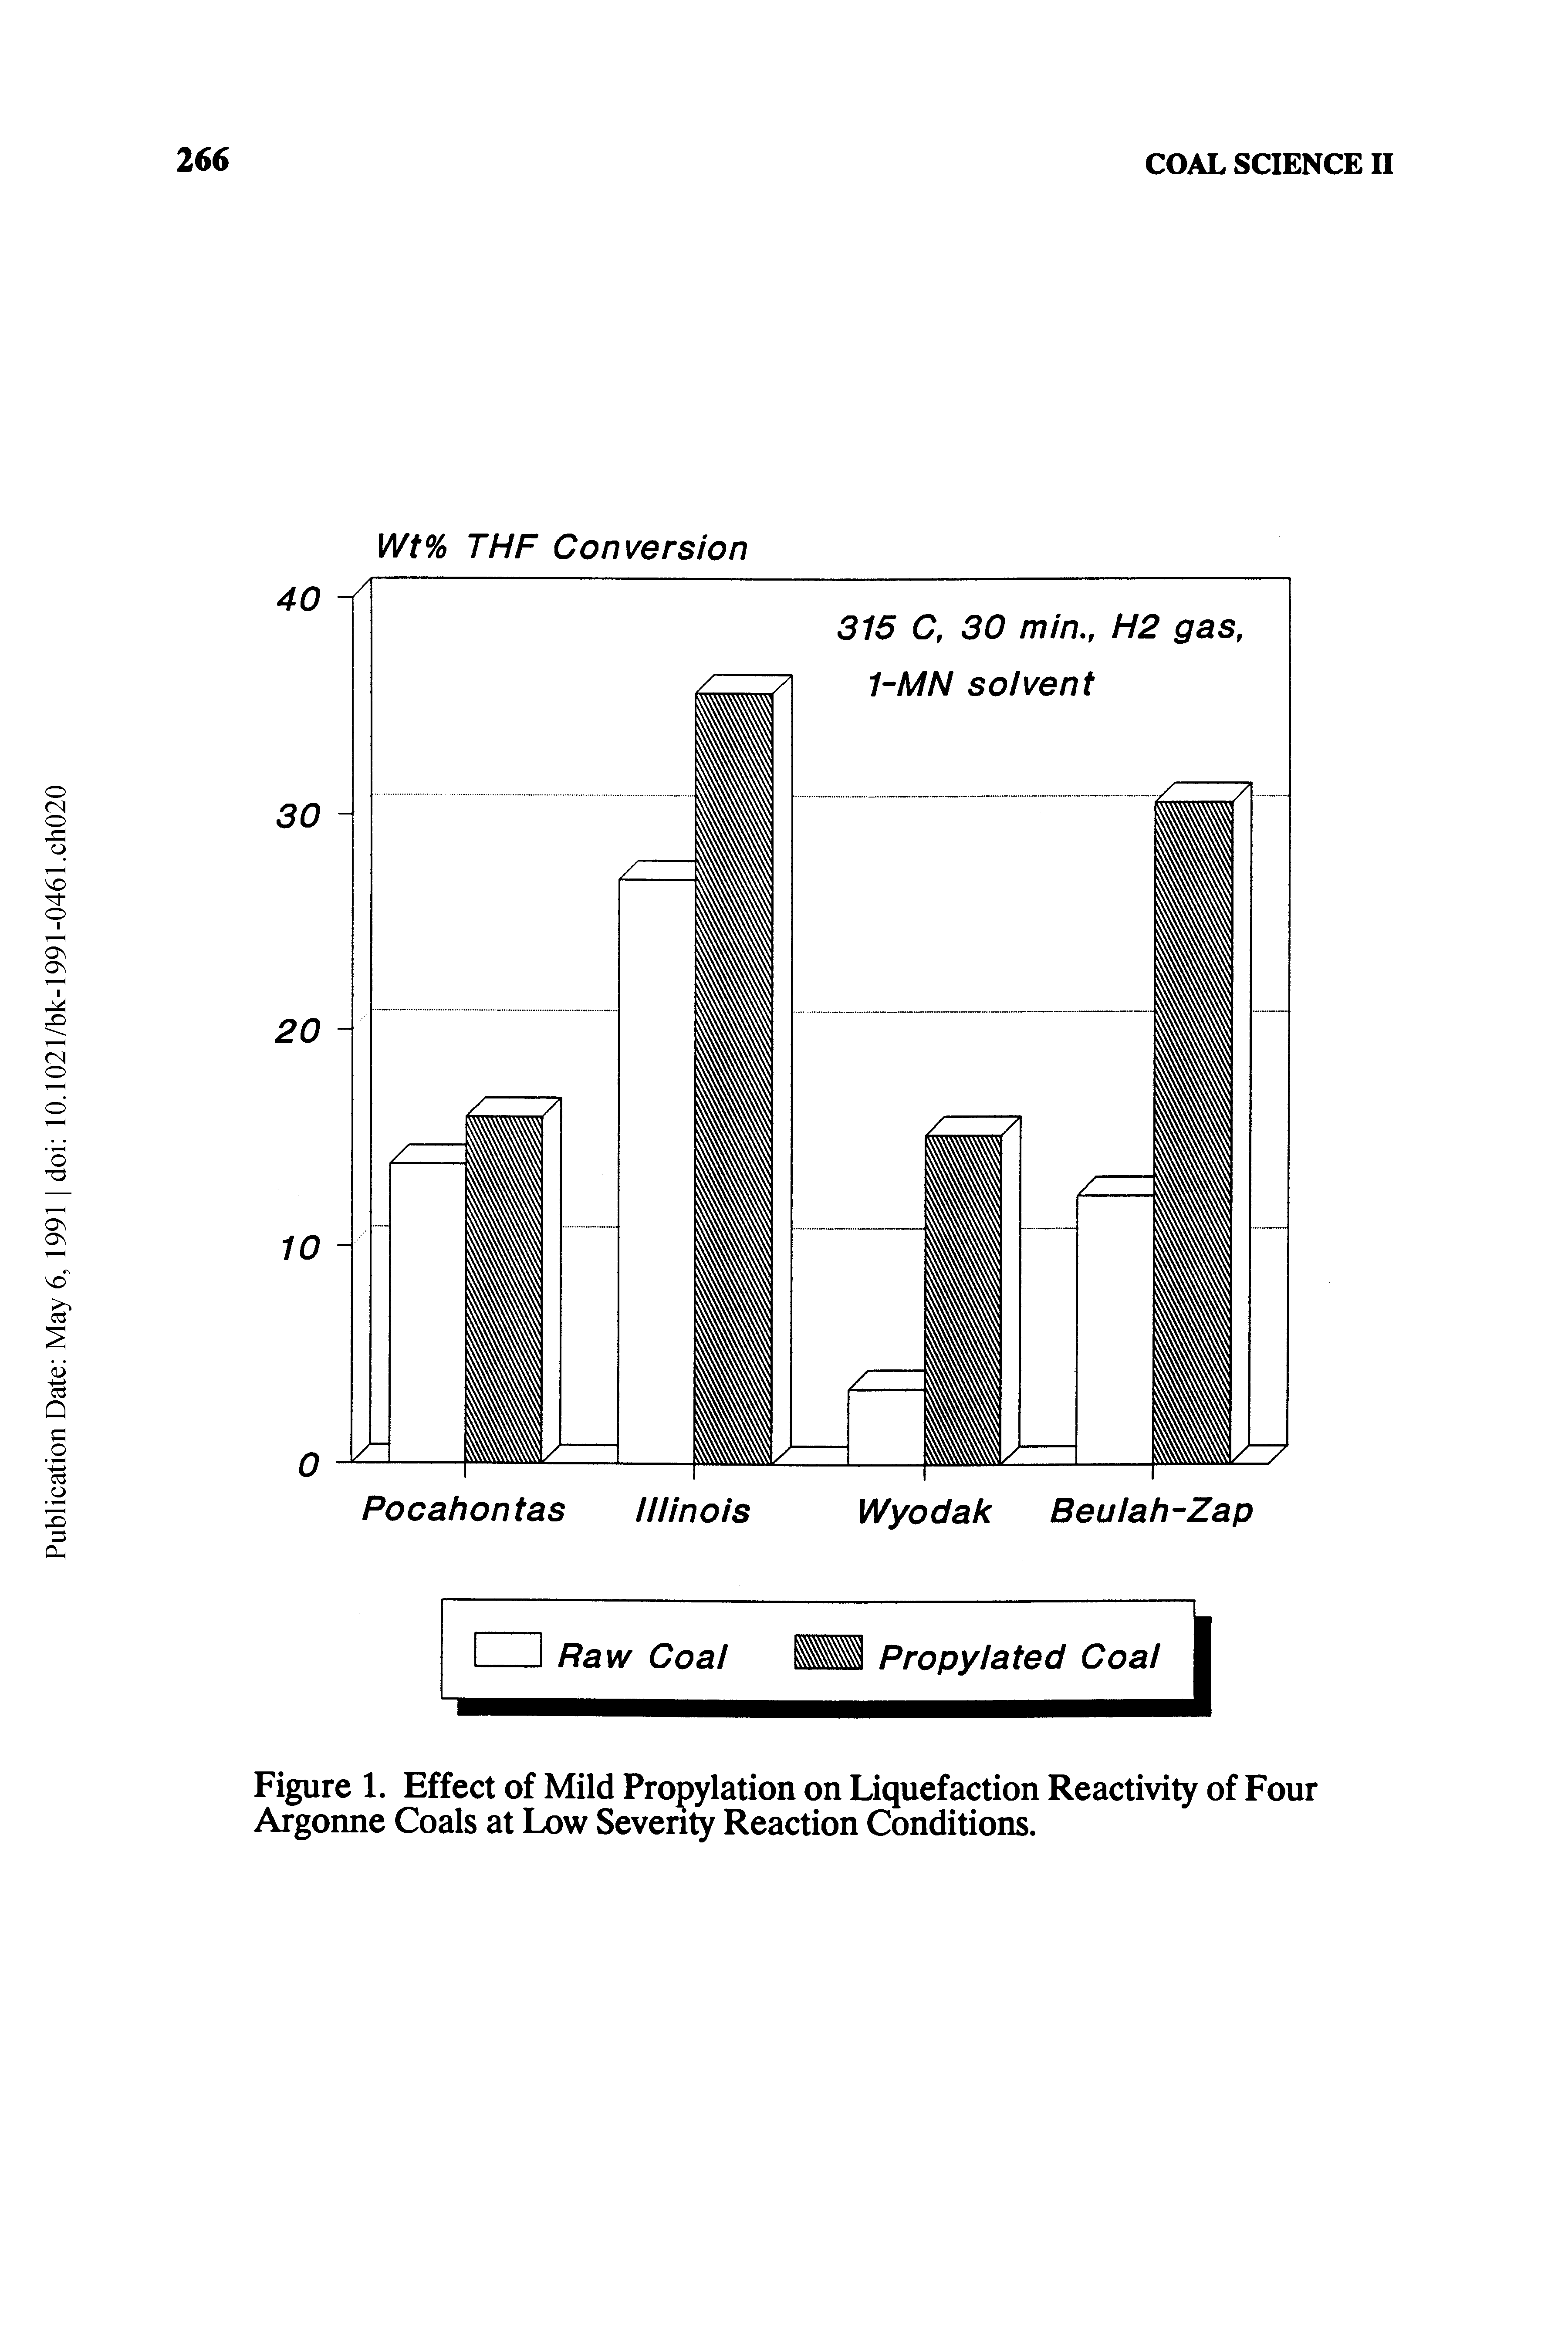 Figure 1. Effect of Mild Propylation on Liquefaction Reactivity of Four Argonne Coals at Low Seventy Reaction Conditions.